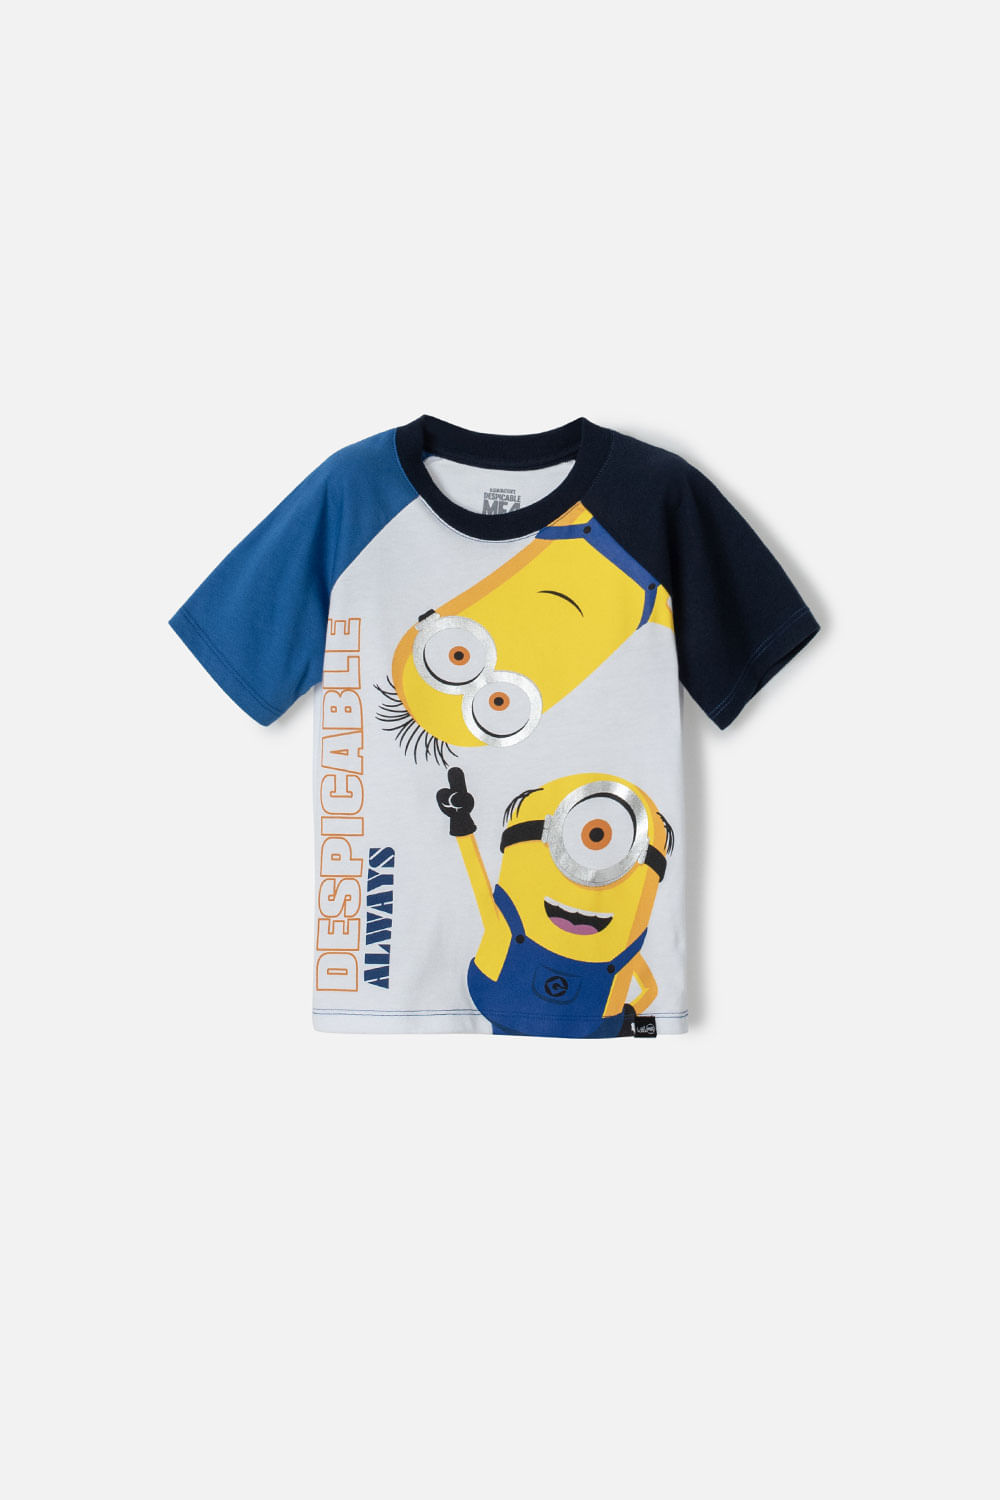 Camiseta de  Minions multicolor manga corta para niño 2T a 5T 2T-0